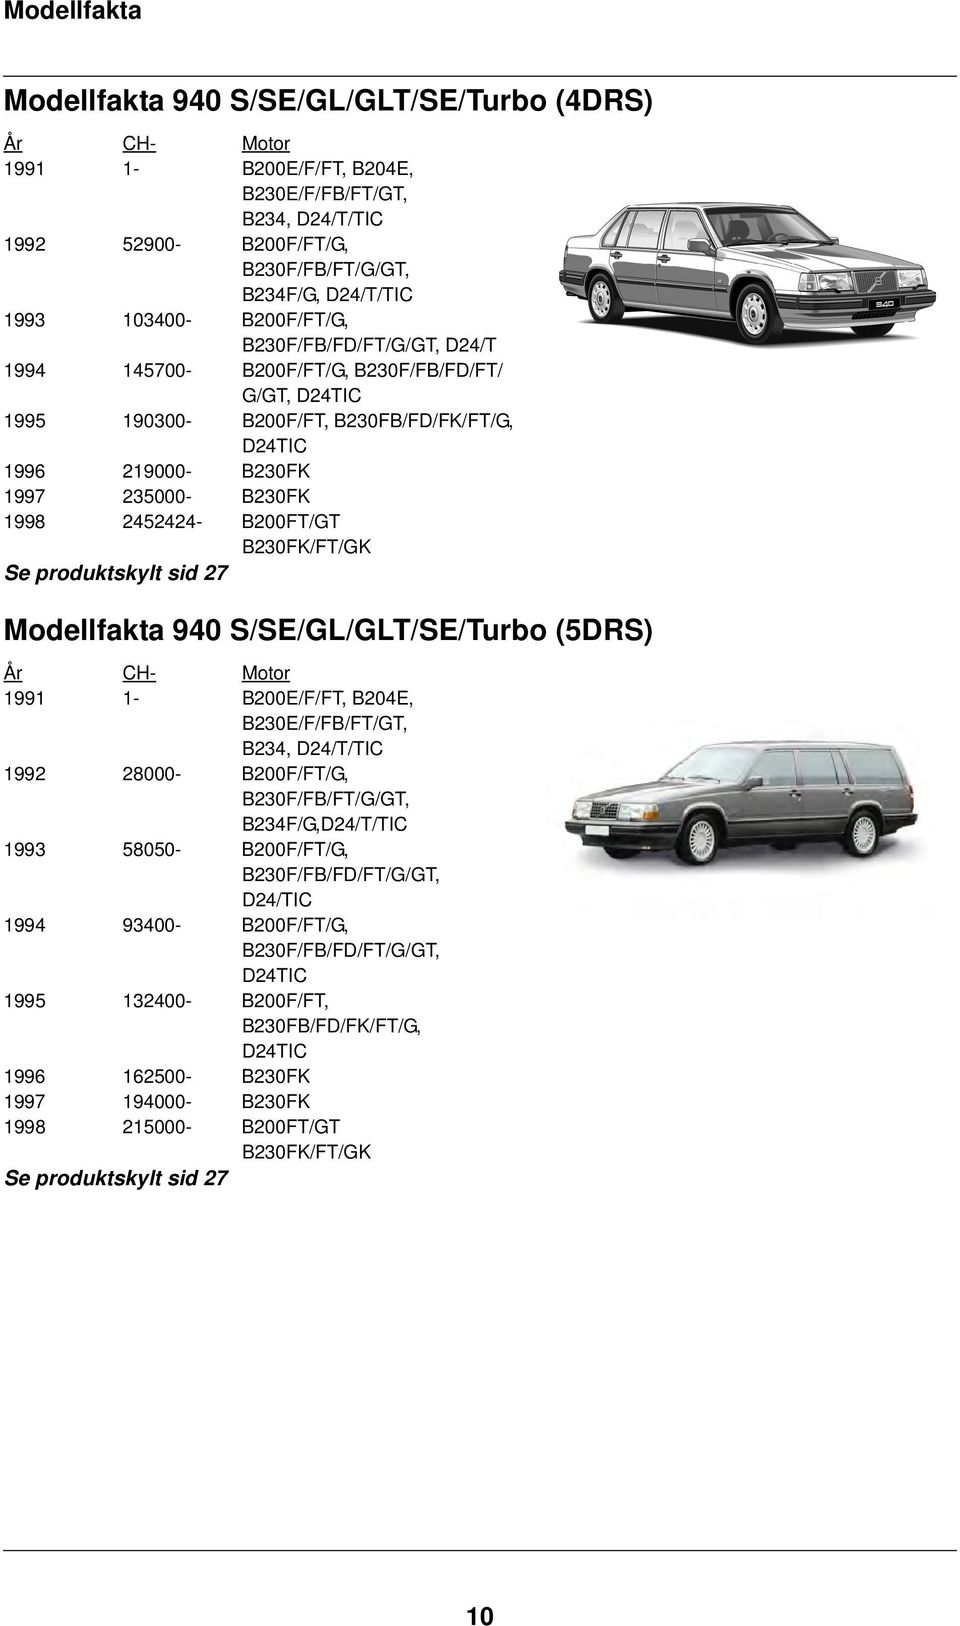 2452424- B200FT/GT B230FK/FT/GK Se produktskylt sid 27 Modellfakta 940 S/SE/GL/GLT/SE/Turbo (5DRS) År CH- Motor 1991 1- B200E/F/FT, B204E, B230E/F/FB/FT/GT, B234, D24/T/TIC 1992 28000- B200F/FT/G,